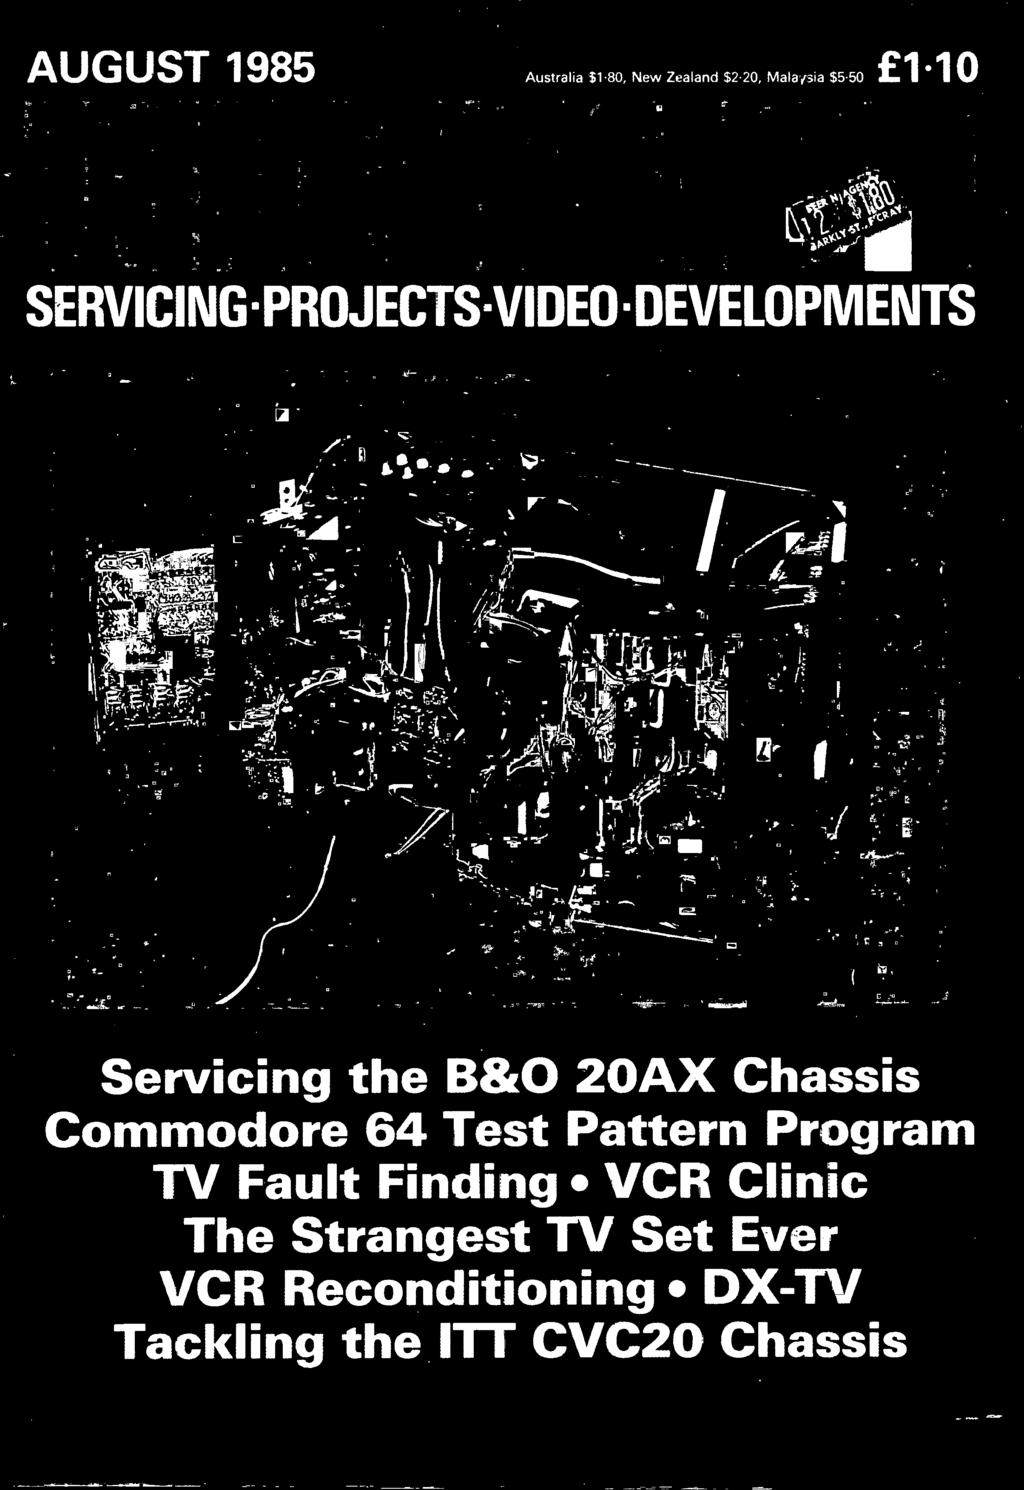 Test Pattern Program TV Fault Finding VCR